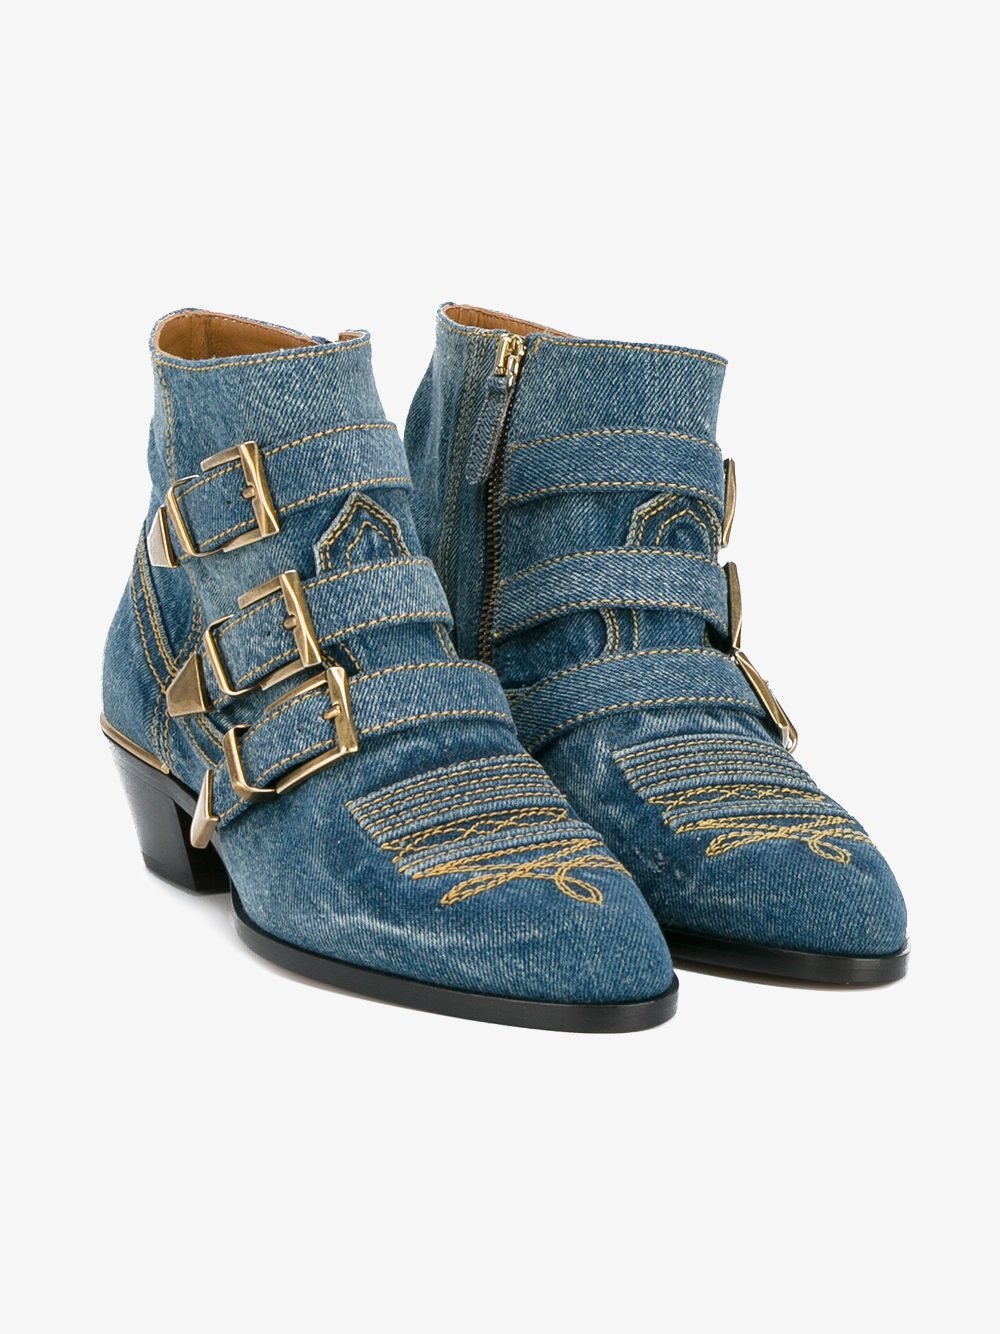 CHLOE Susanna Ankle Boots £745 brownsfashion.com